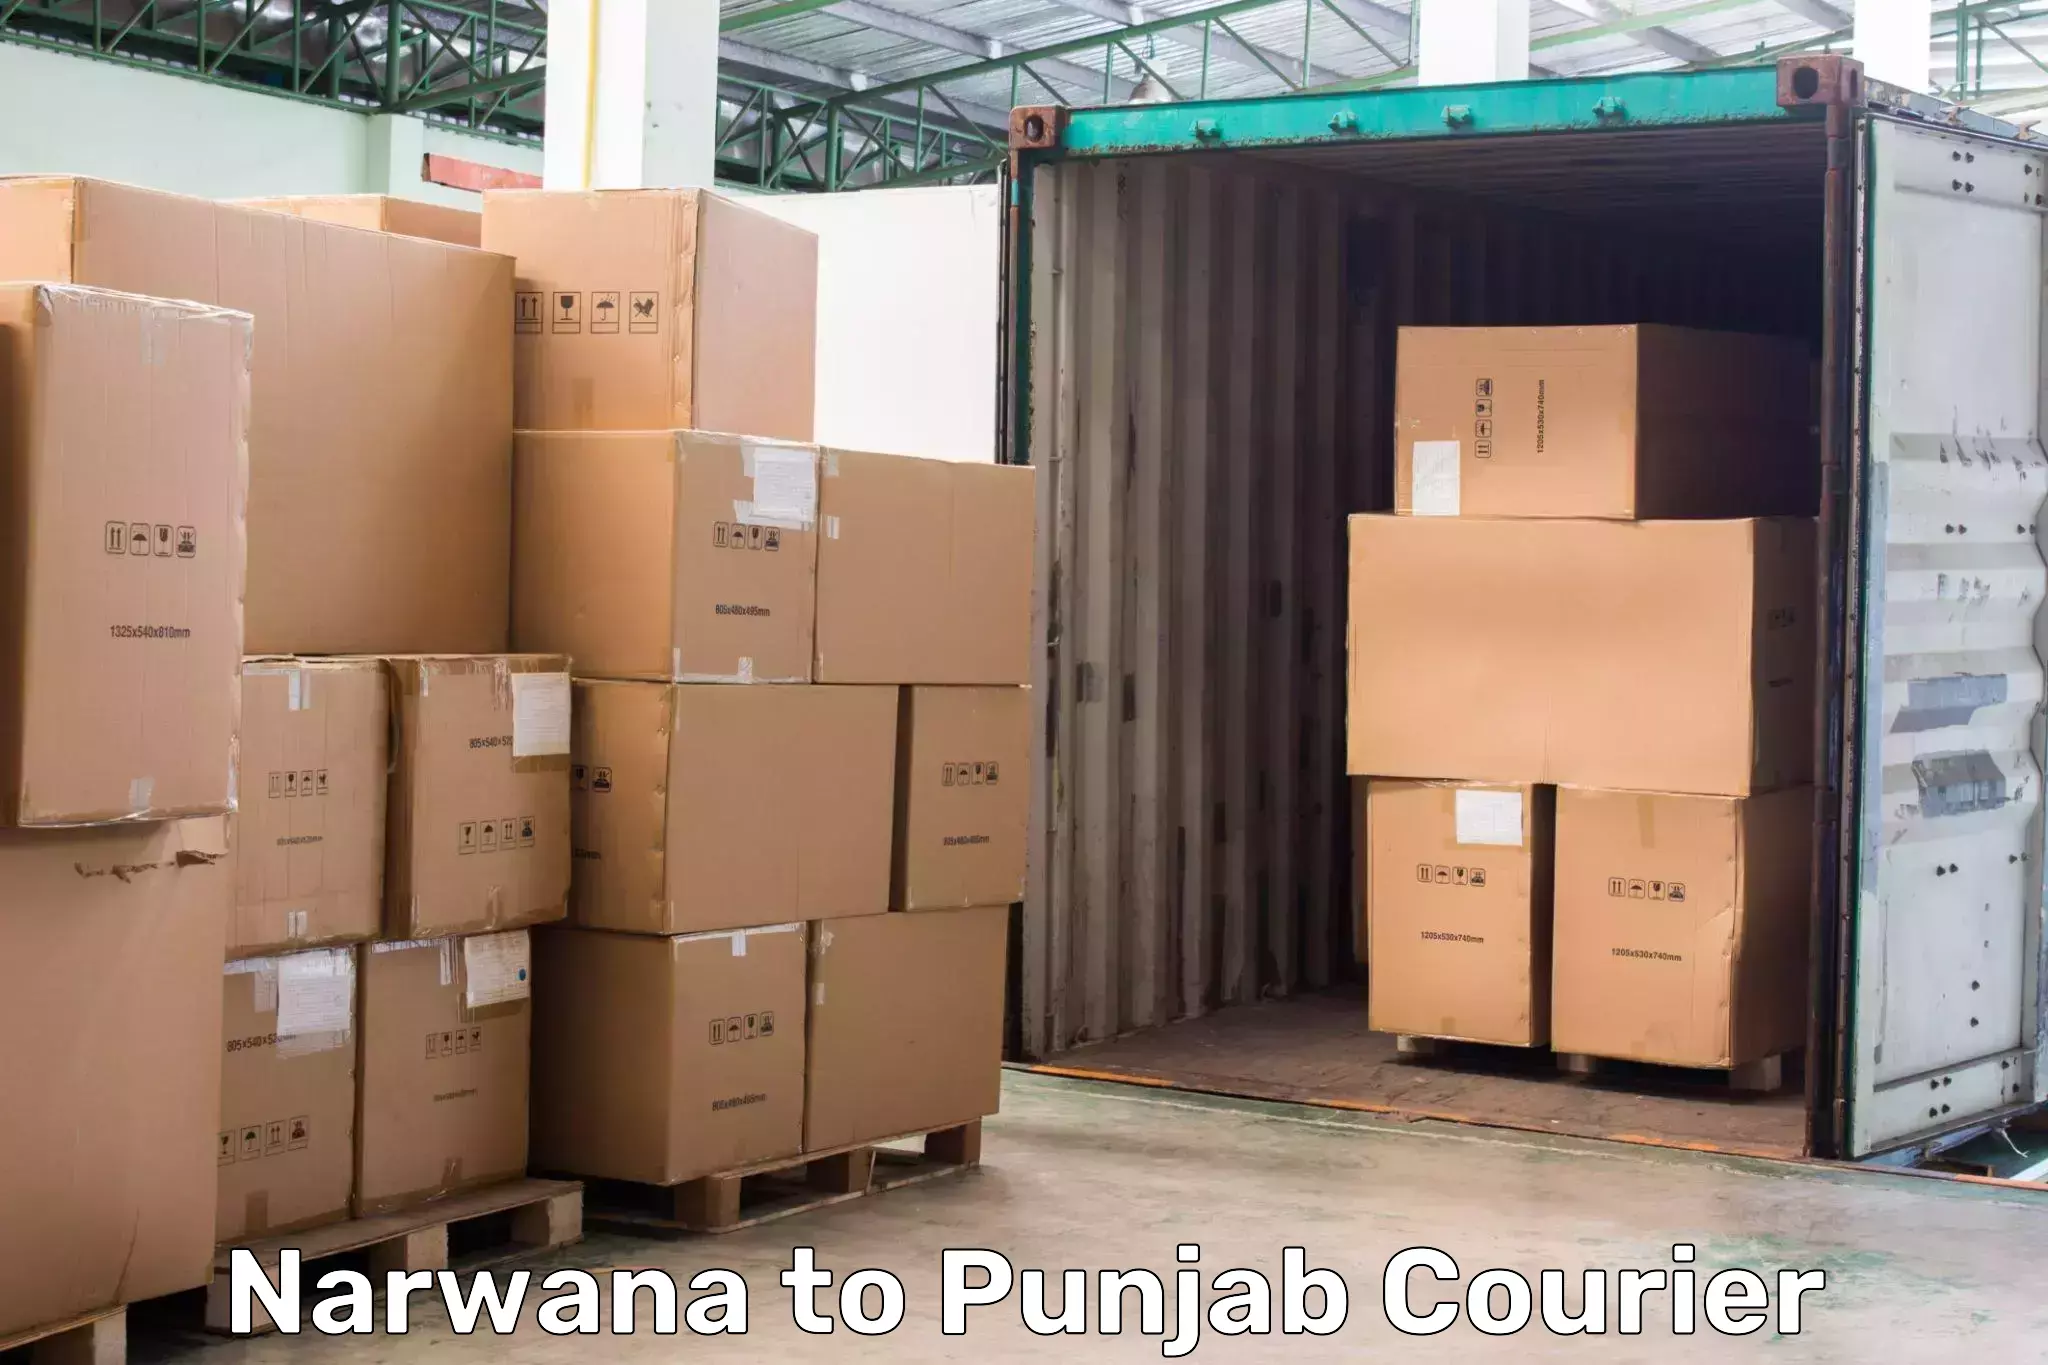 Global logistics network Narwana to Punjab